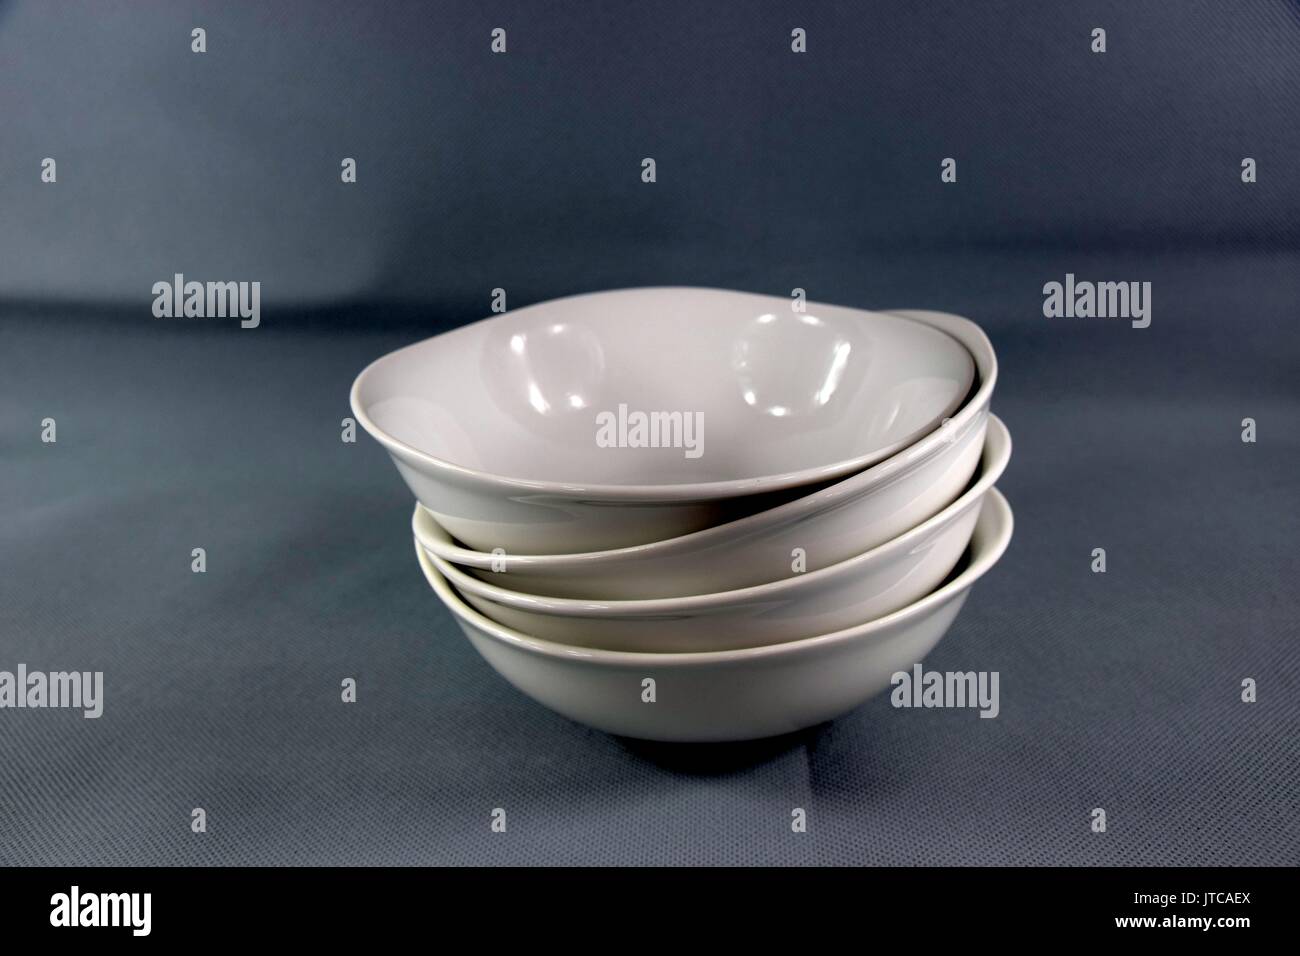 some white ceramic bowls, ceramics,porcelain dish Stock Photo